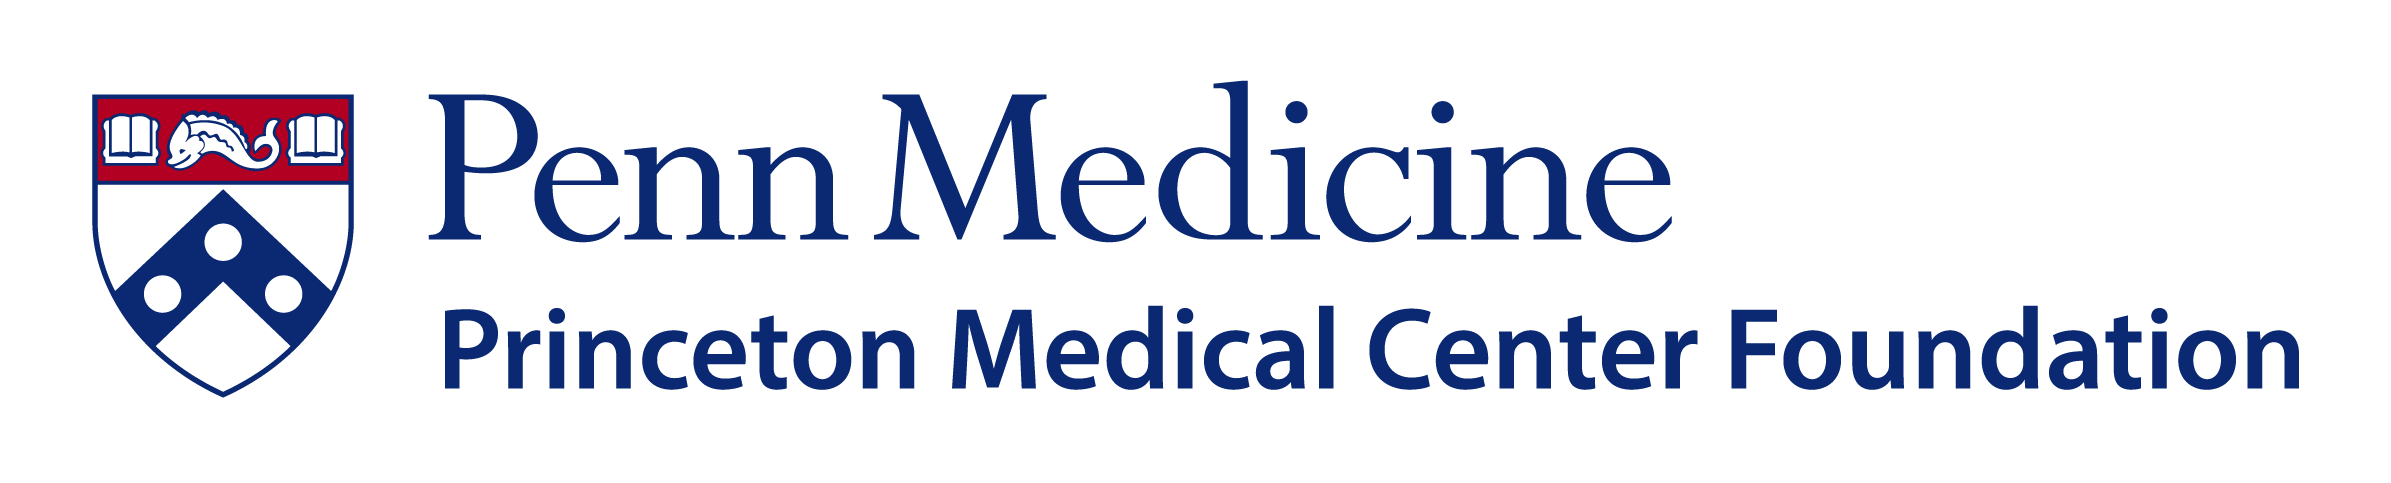 Penn Medicine Princeton Medical Center Foundation